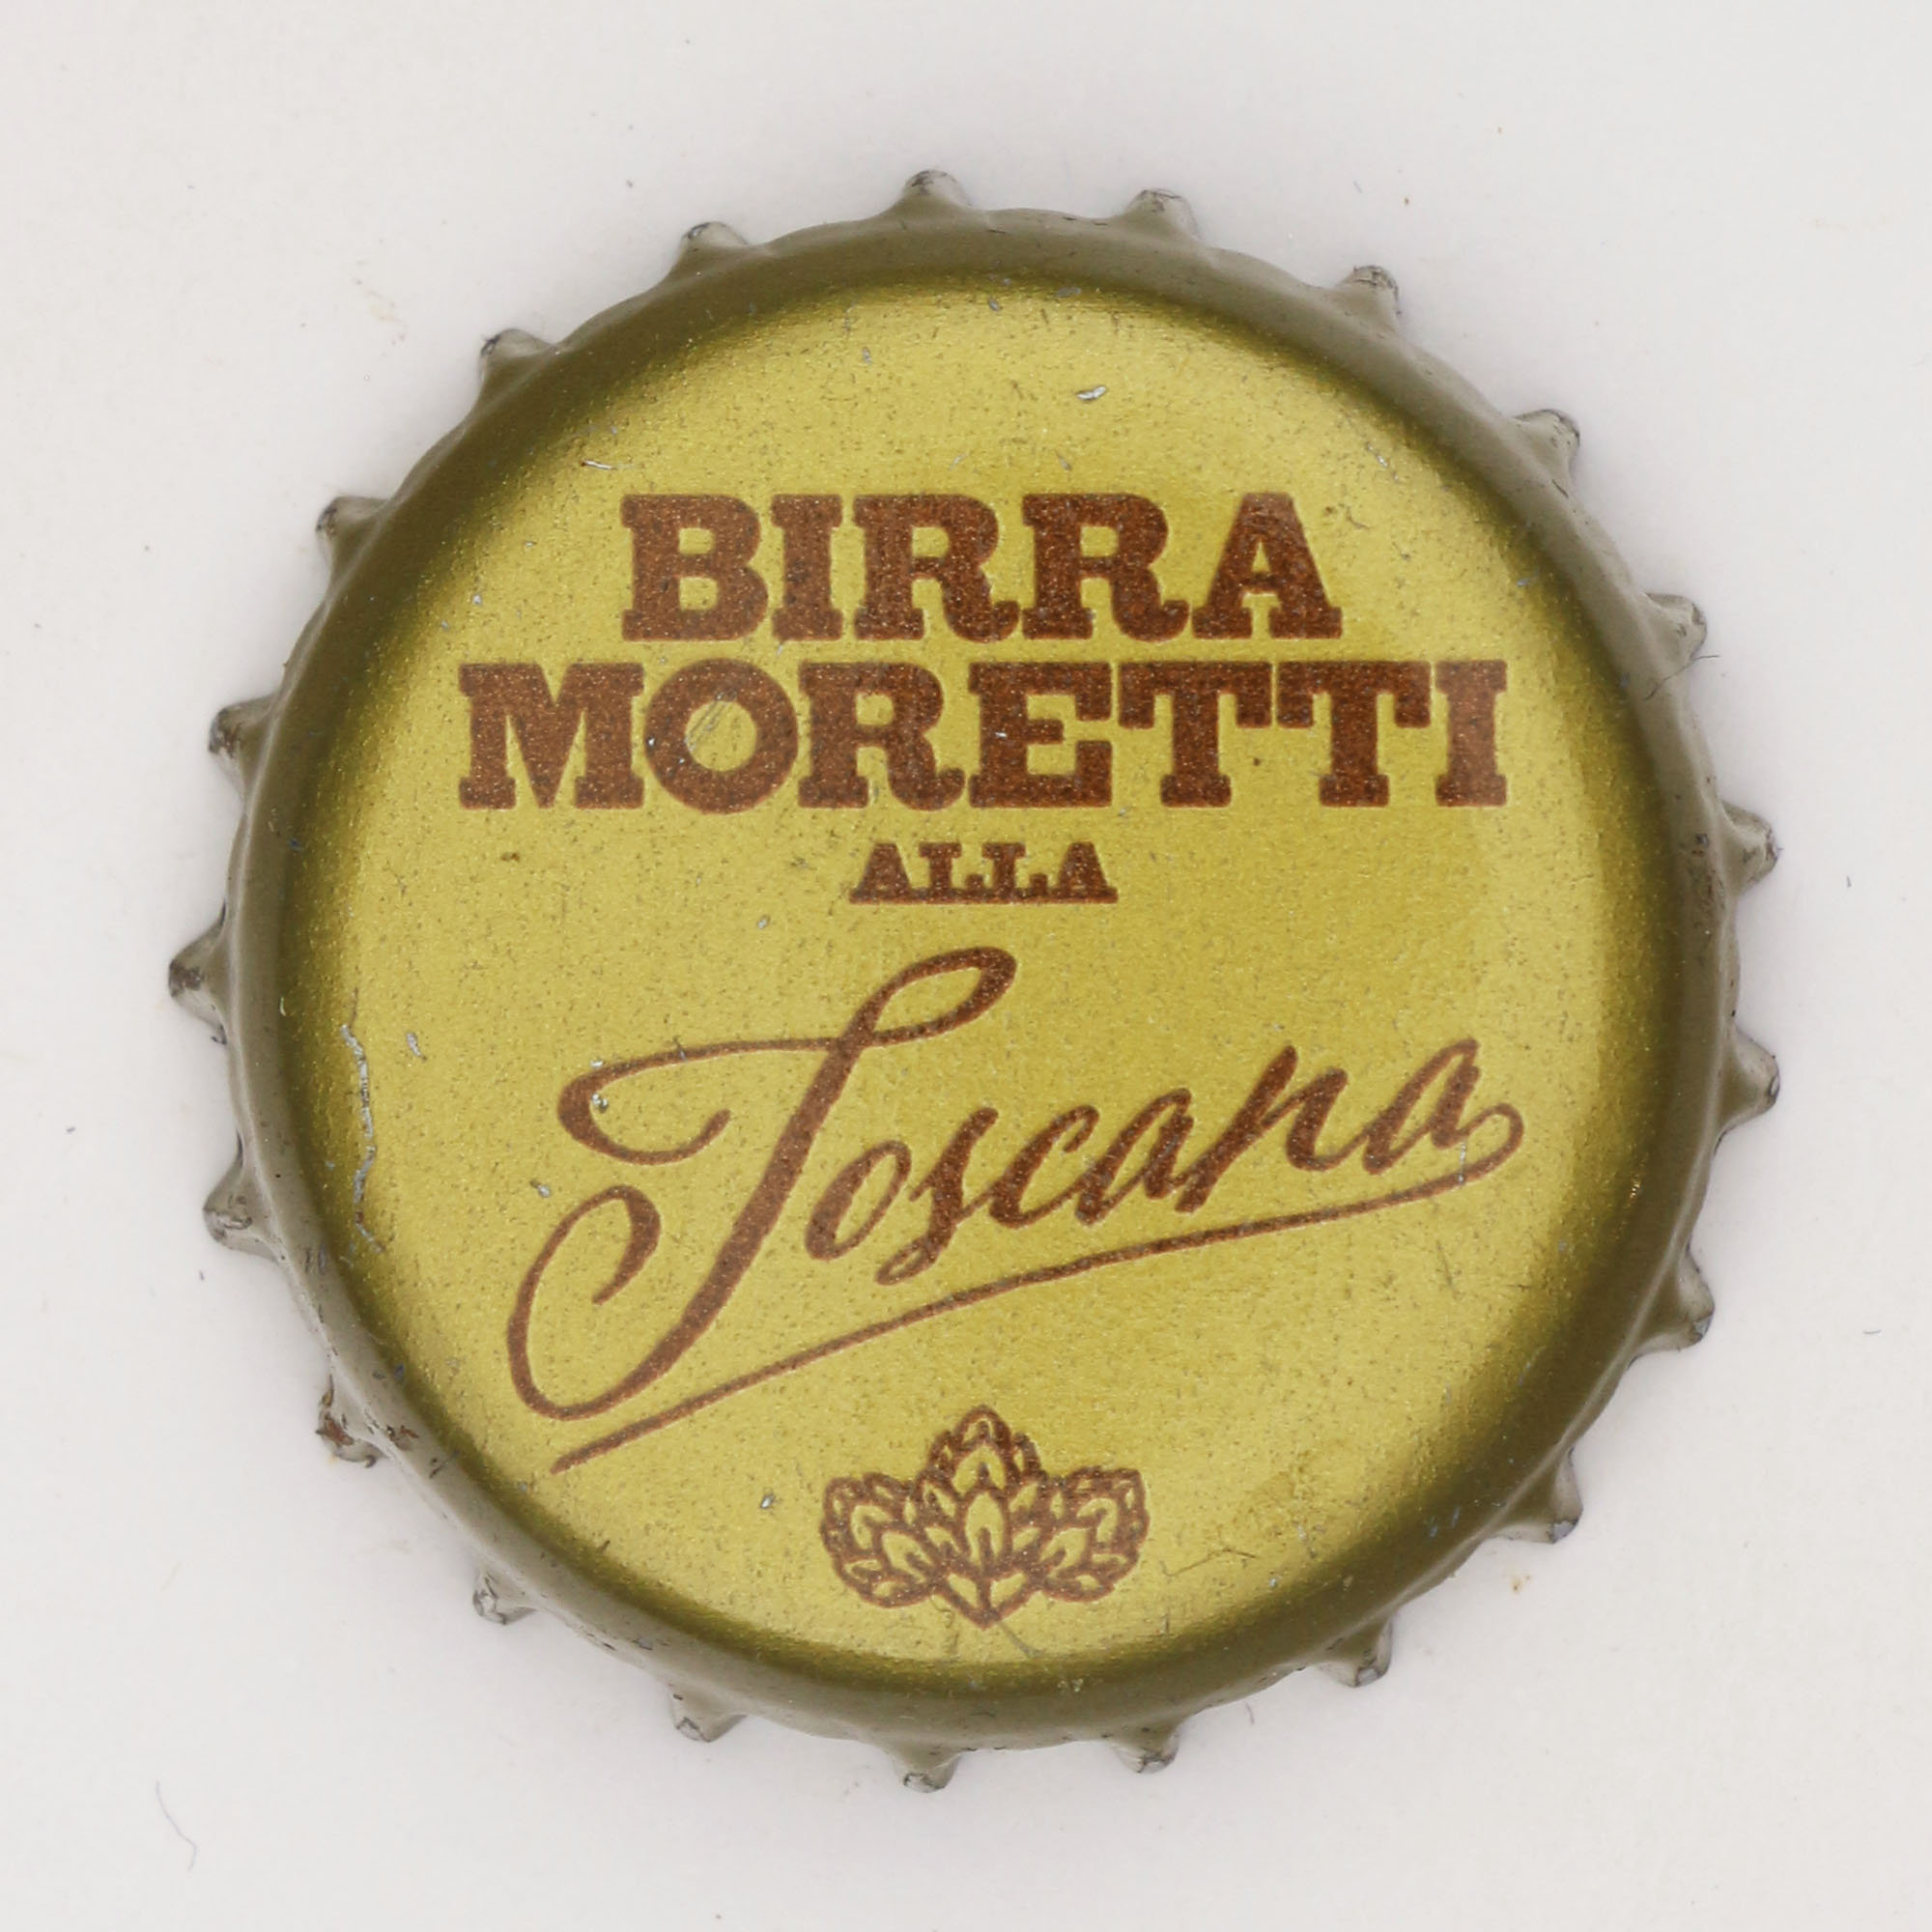 Birra alla Toscana